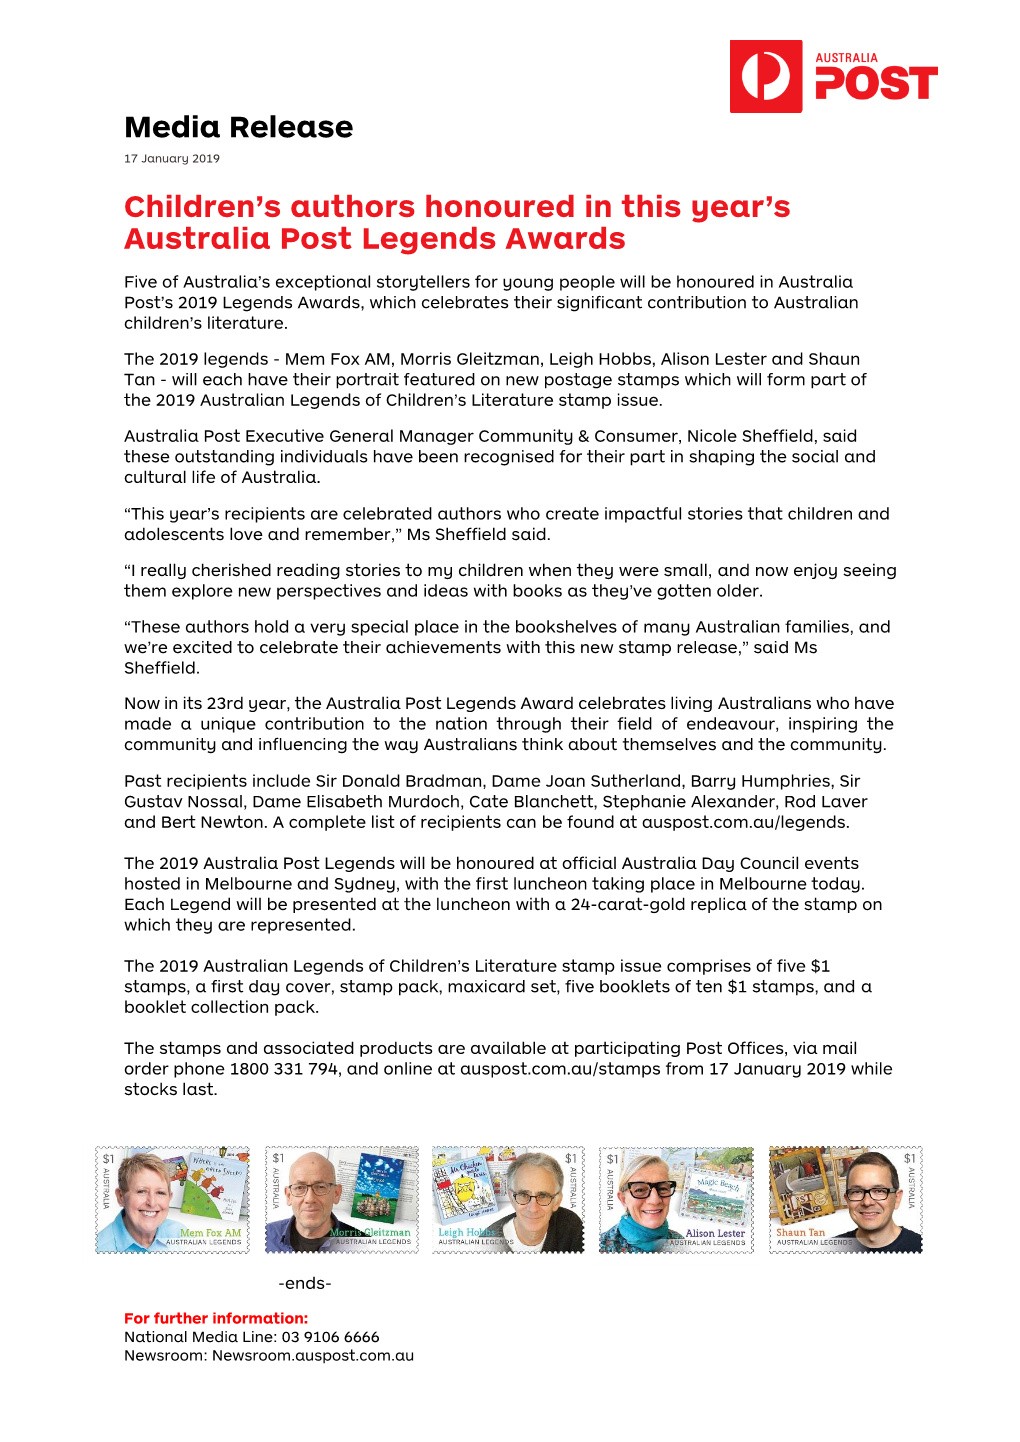 Australia Post Legends Media Release